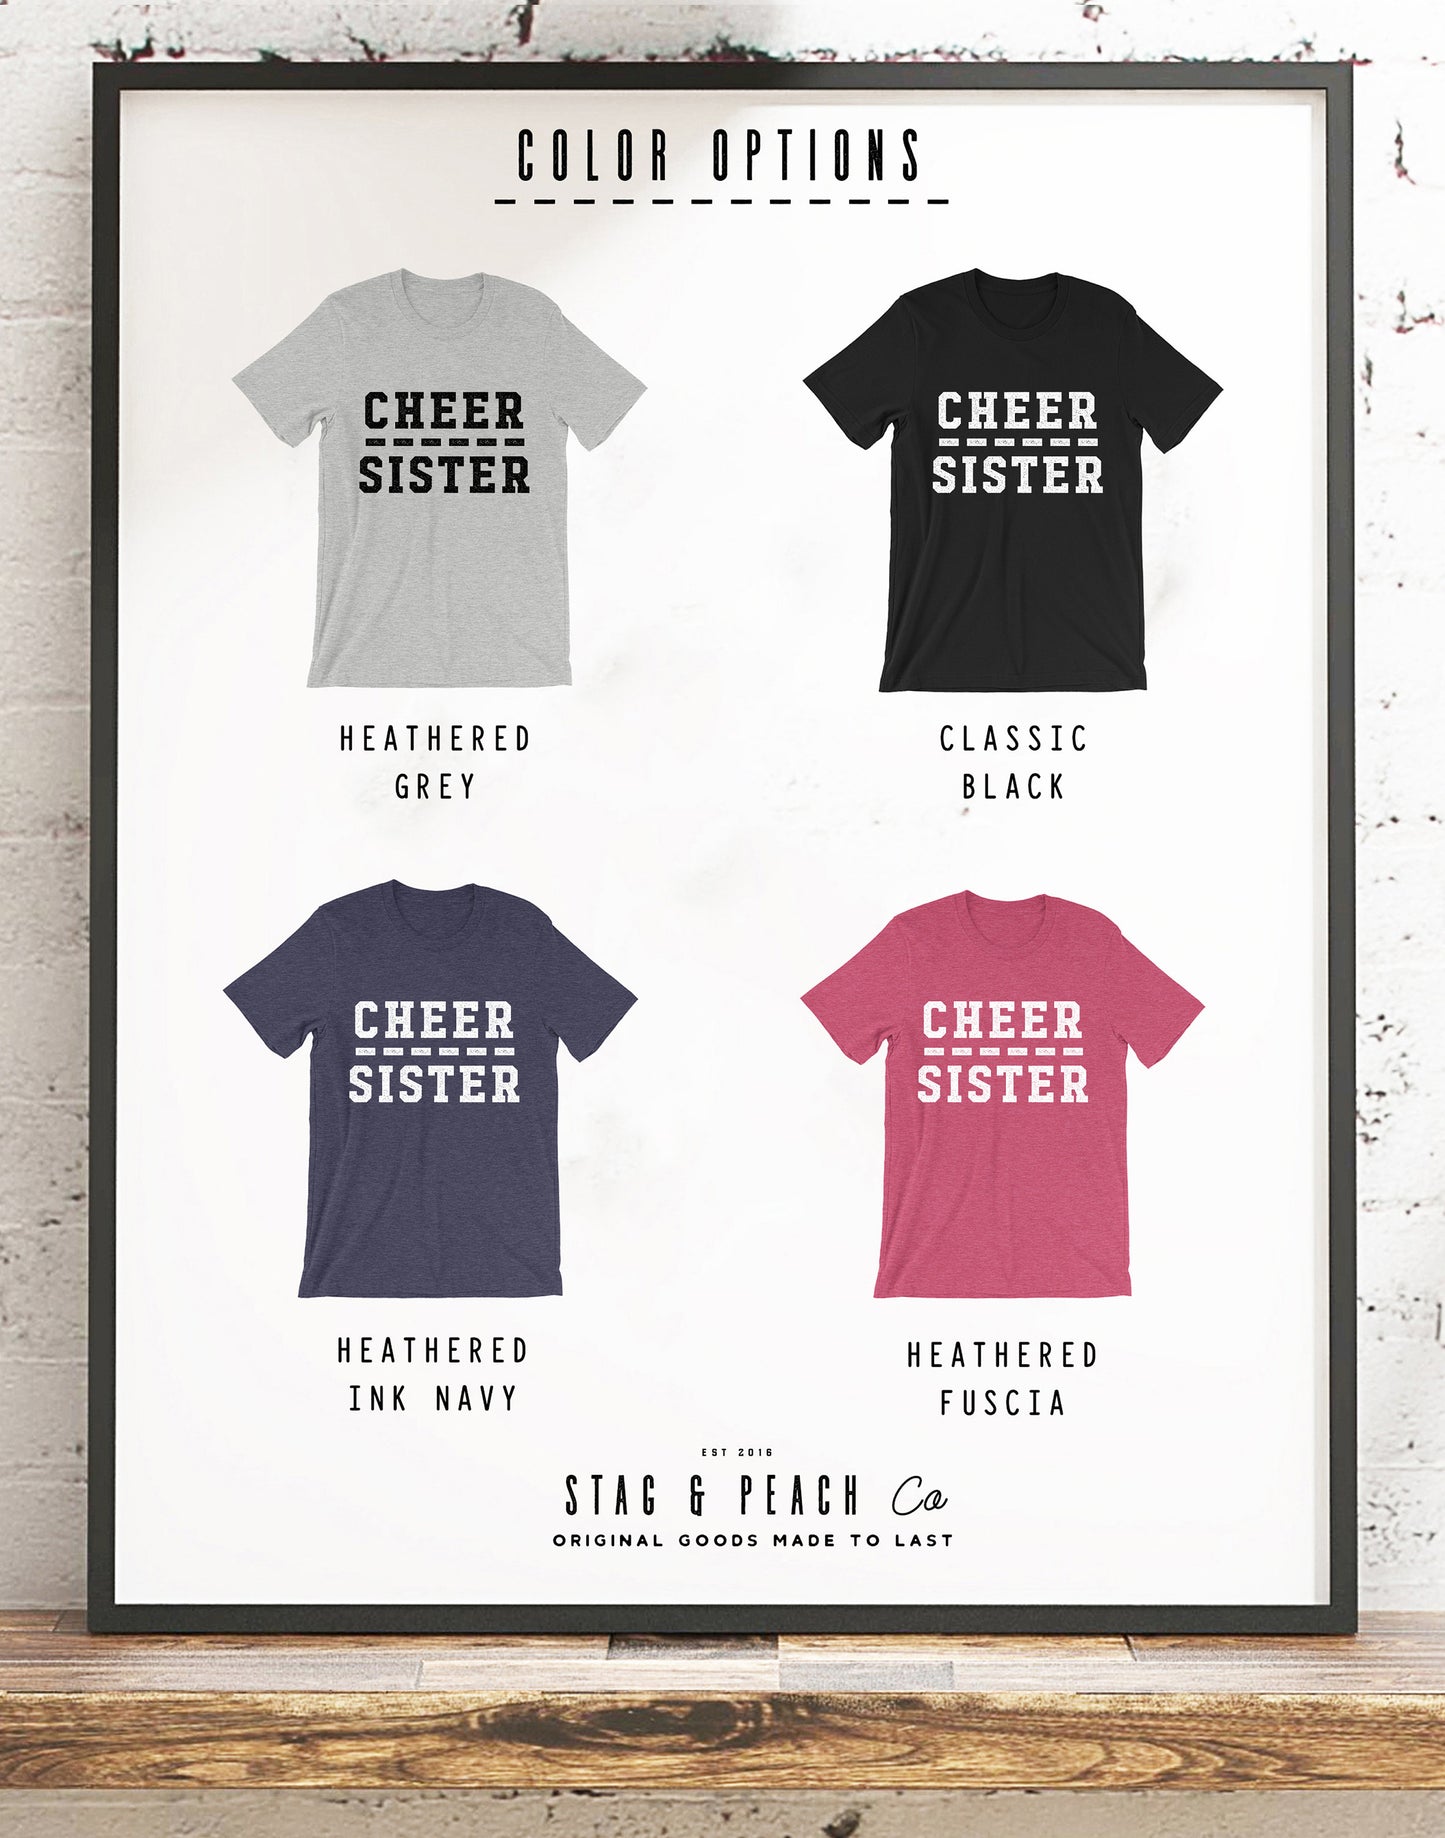 Cheer Sister Unisex Shirt - Cheerleading Gifts, Cheer Sister Shirt, Cheer Shirt, Cheerleading Sister, Cheer Gift, Big Sister Shirt